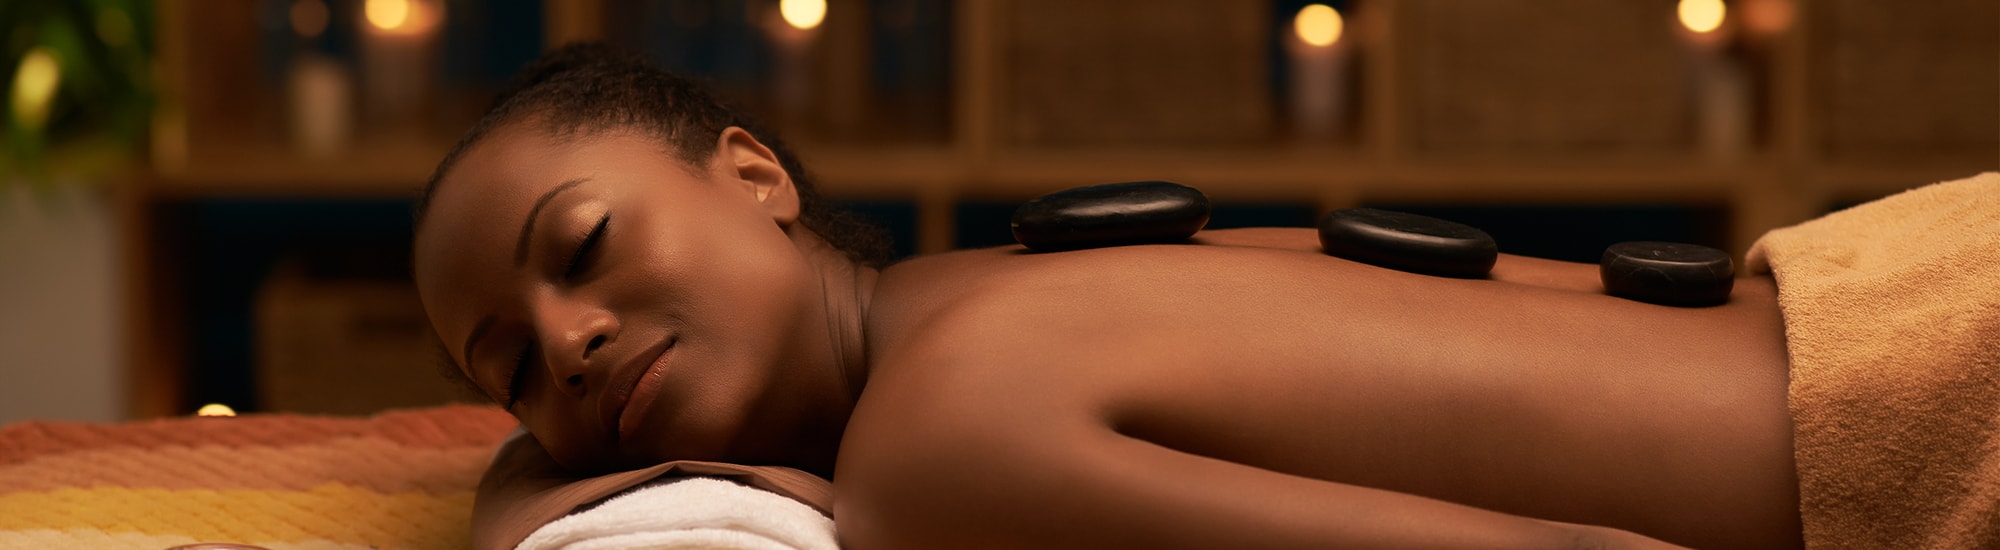 10 Incredible Benefits of Reflexology Massage